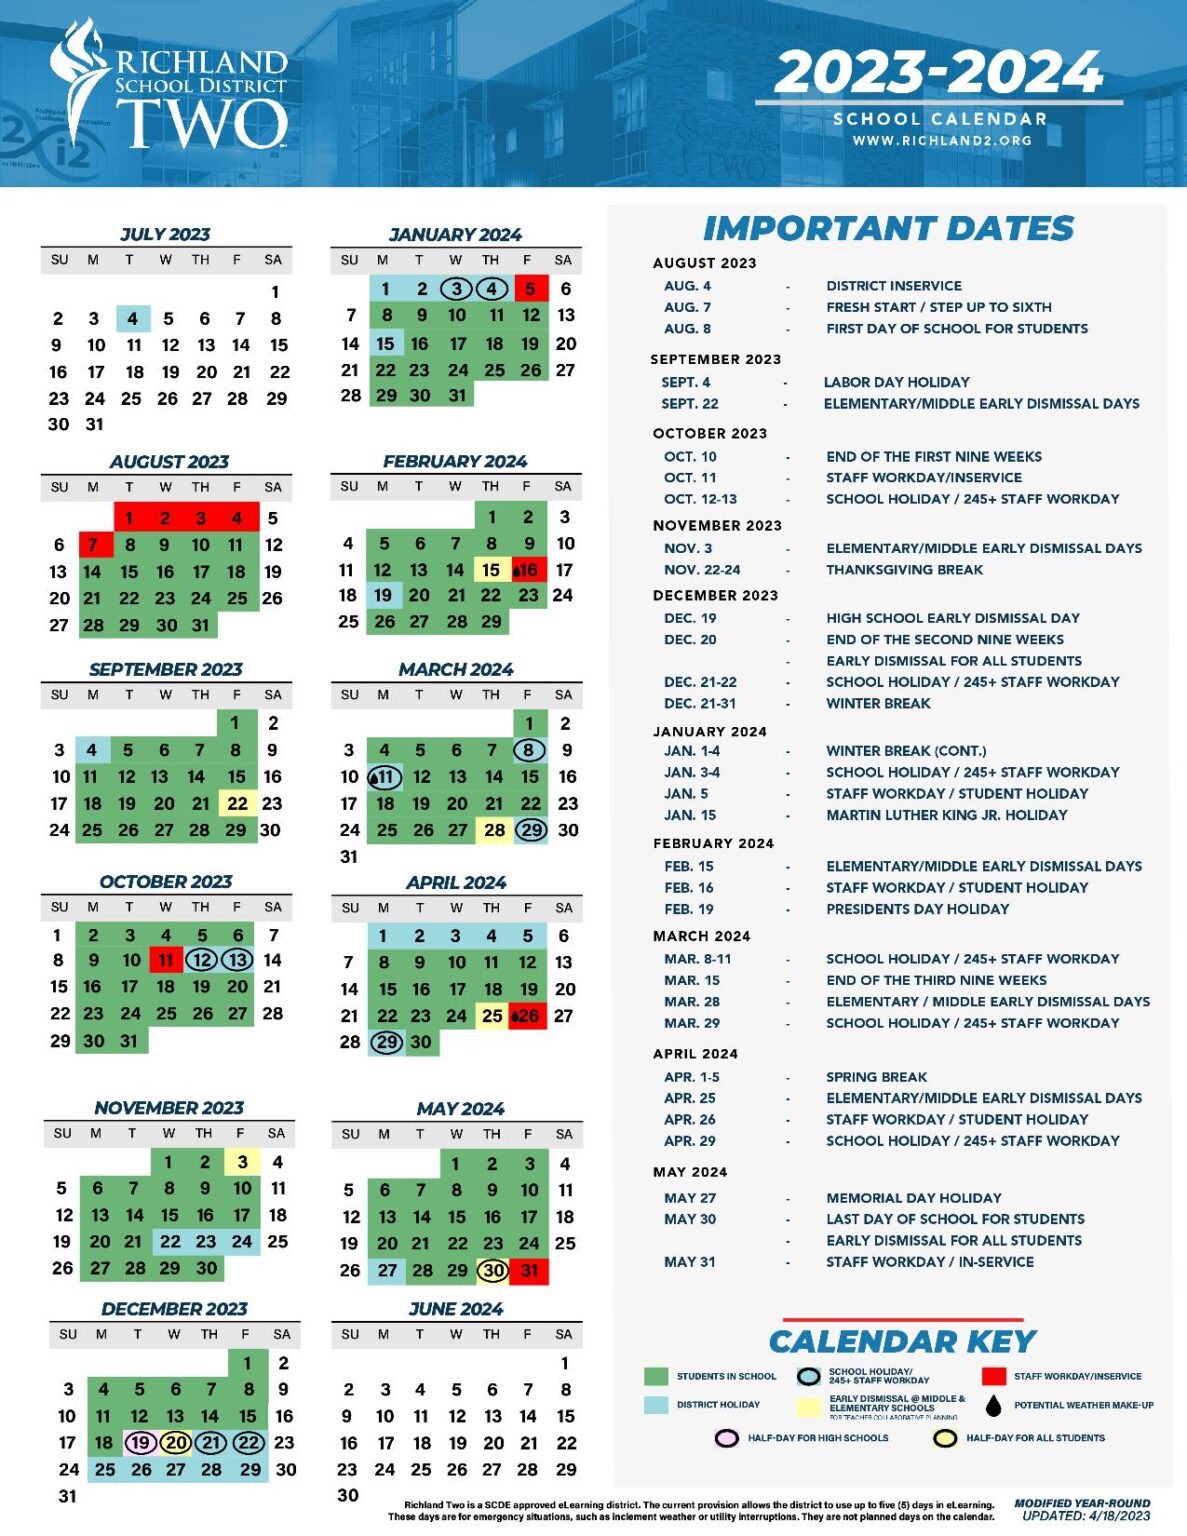 Richland School District 2 Calendar 20232024 in PDF